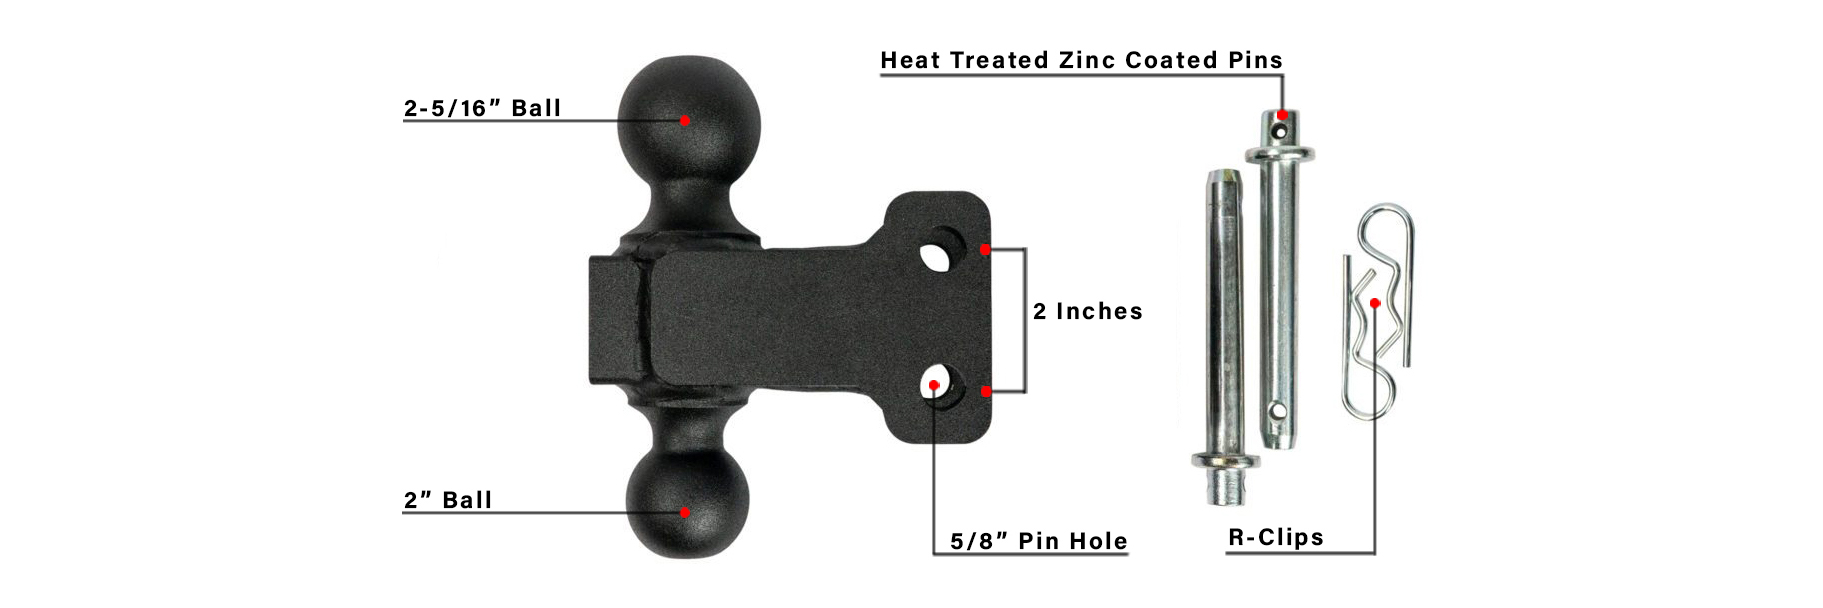 BulletProof Medium Duty Dual Ball with Pins Description